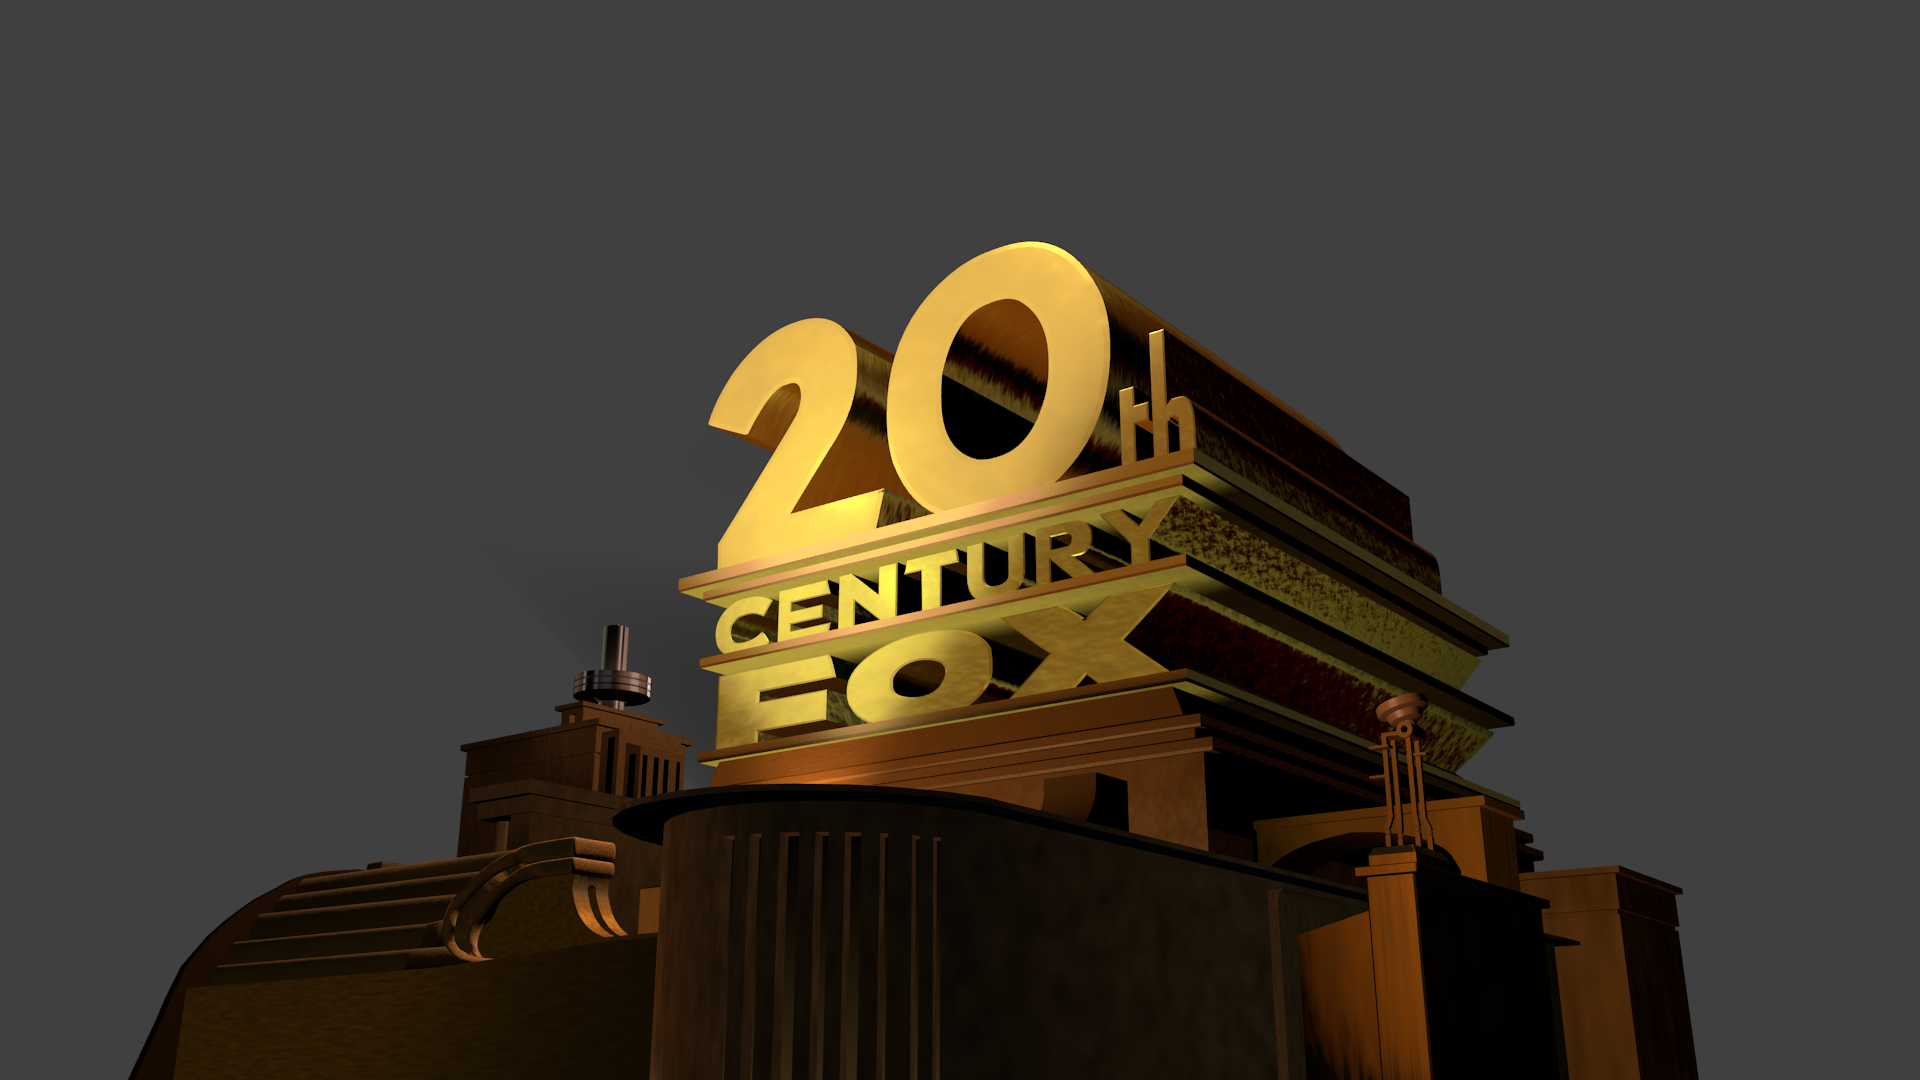 20 Век Центури Фокс. 20th Century Fox logo. 20 Век Фокс Пикчерз. 20 Студия Фокс.